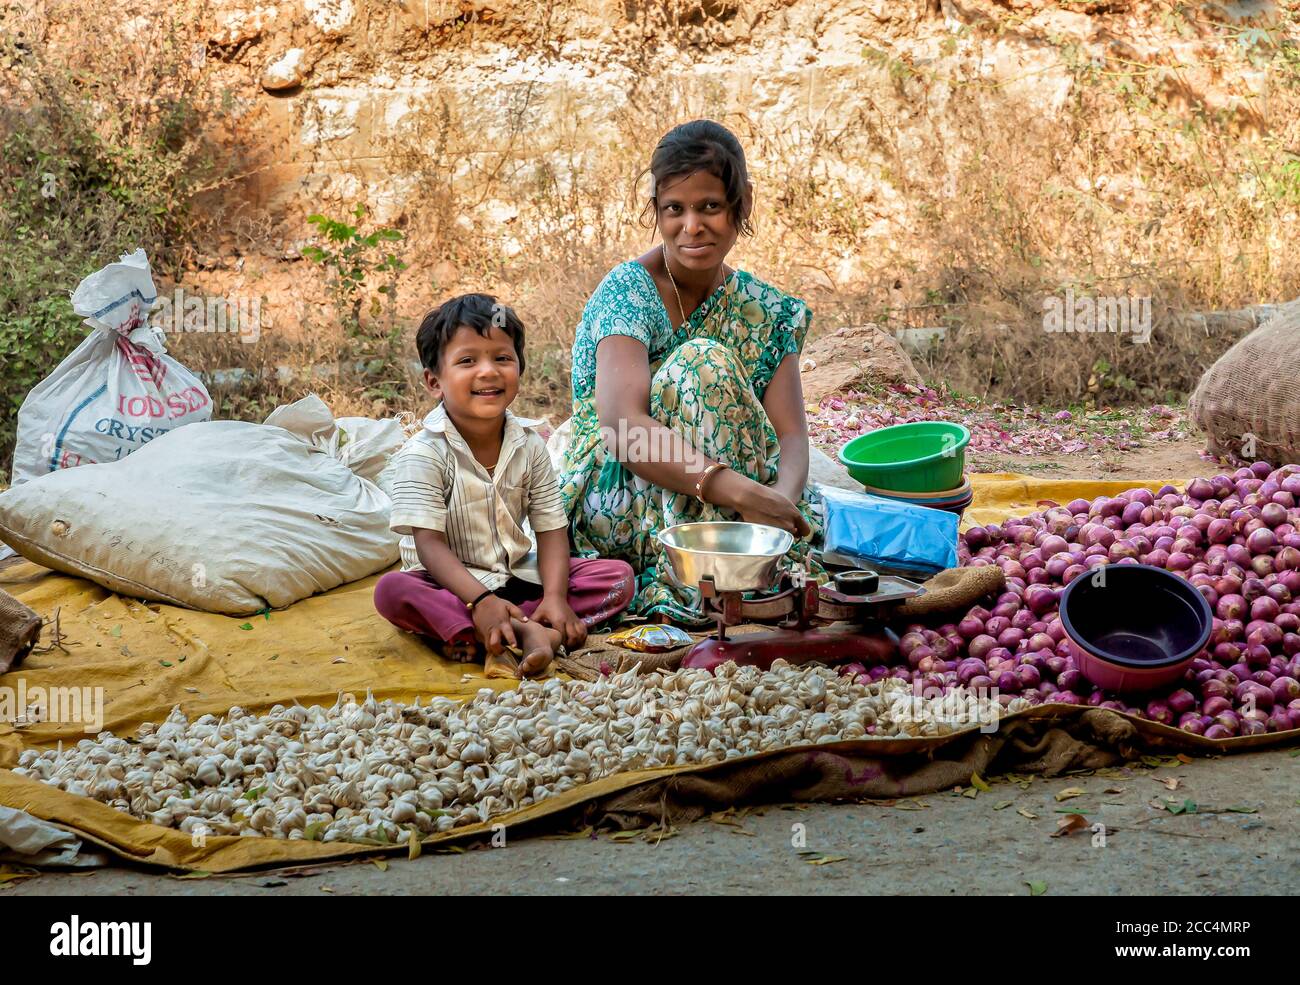 Puttaparthi, Andhra Pradesh, India - January 13, 2013: Mother and son selling garlic and onions at street market of Puttaparthi, India Stock Photo